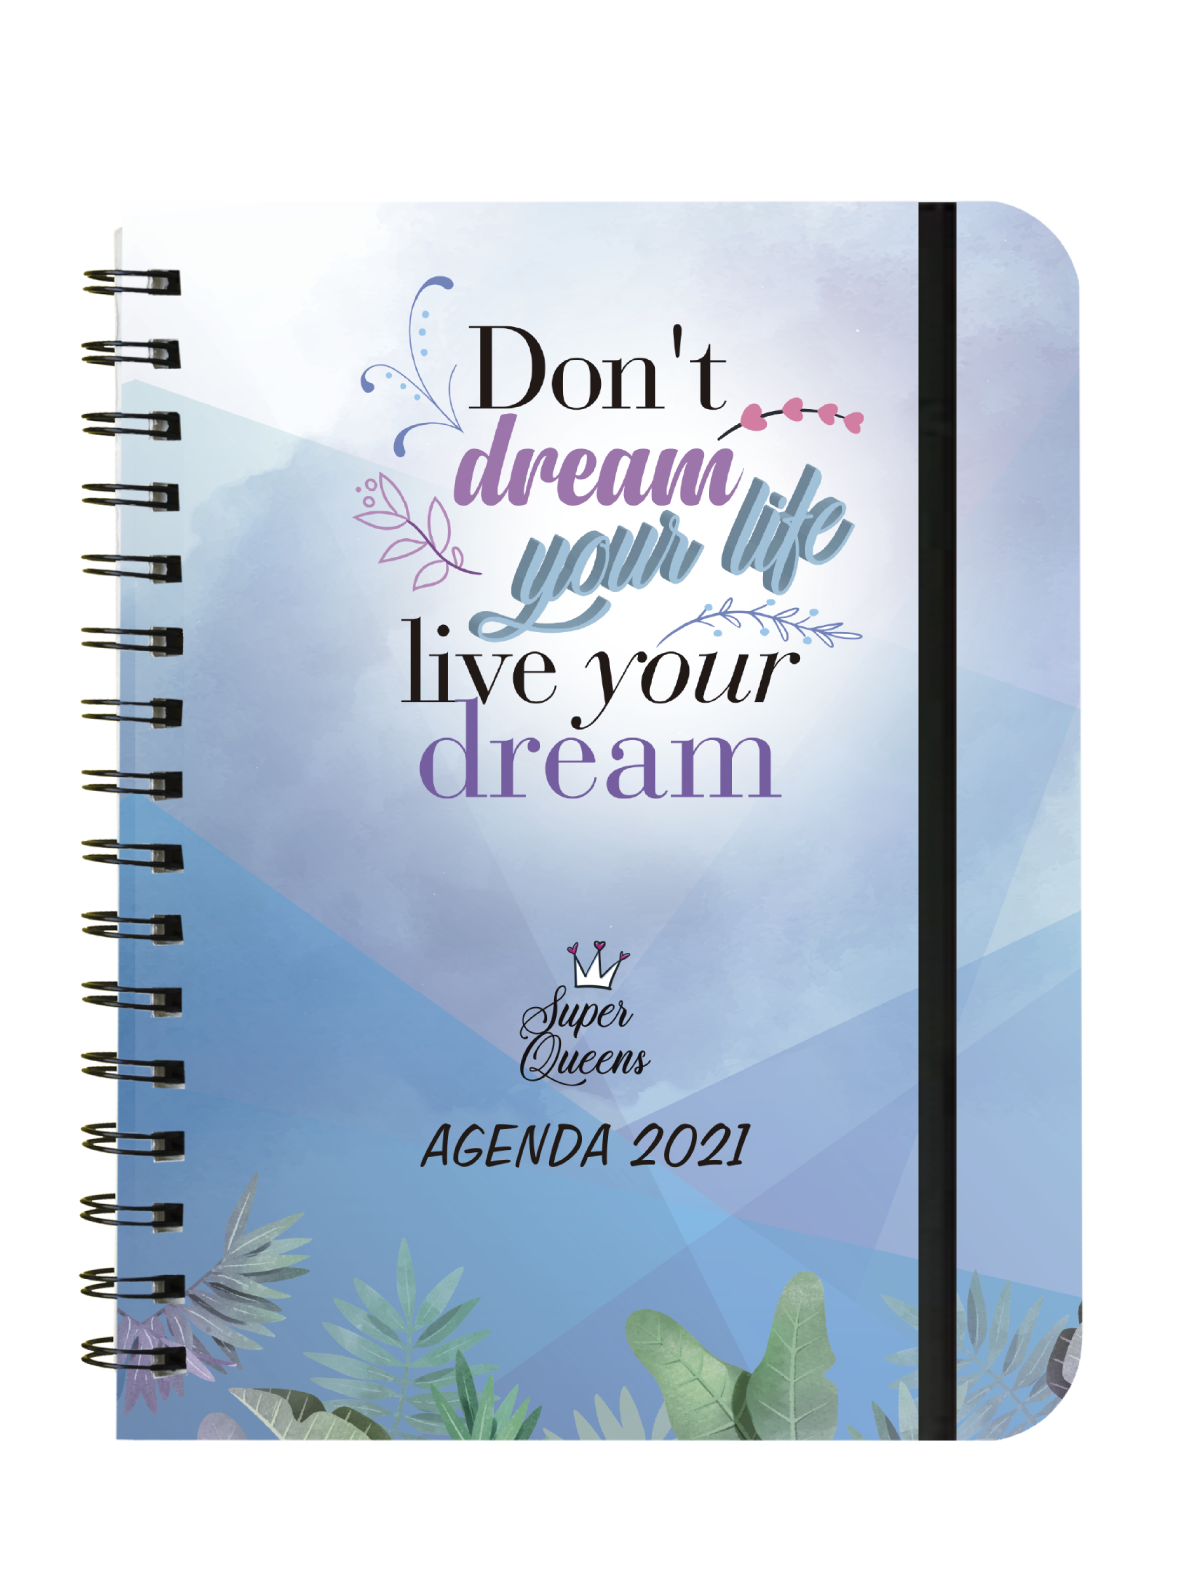 LIVE YOUR DREAM - Agenda 2021Super Queens